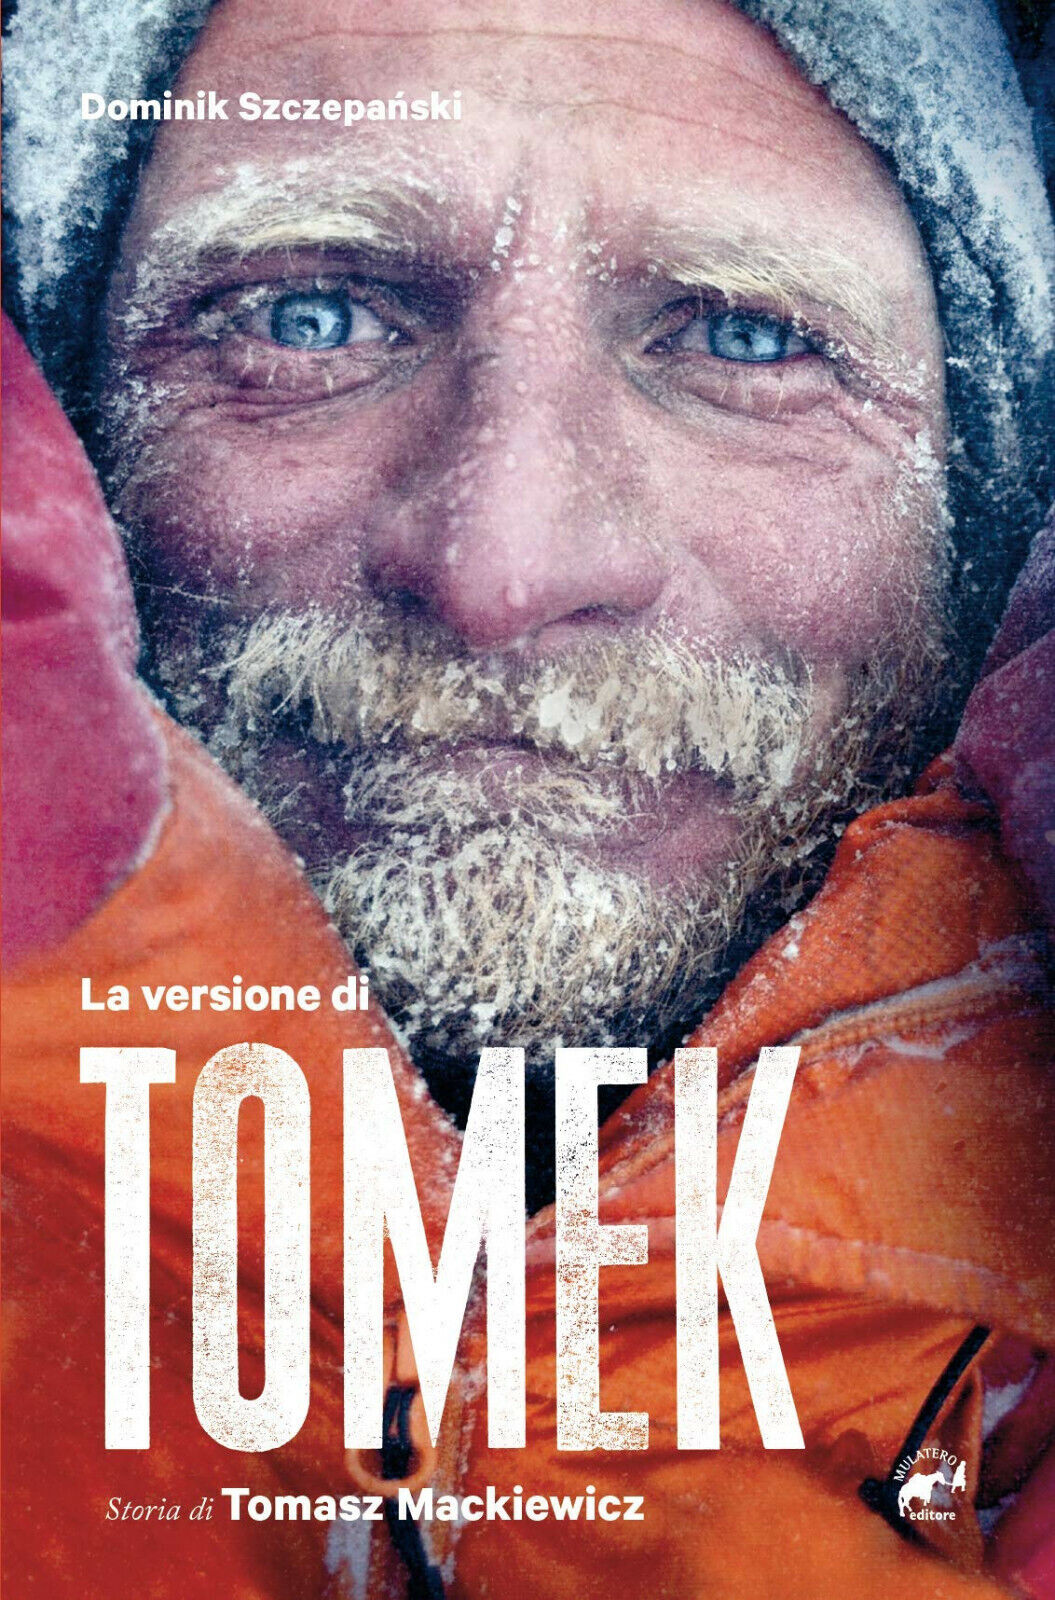 La versione di TOMEK - Dominik Szczepanski - Mulatero, 2019